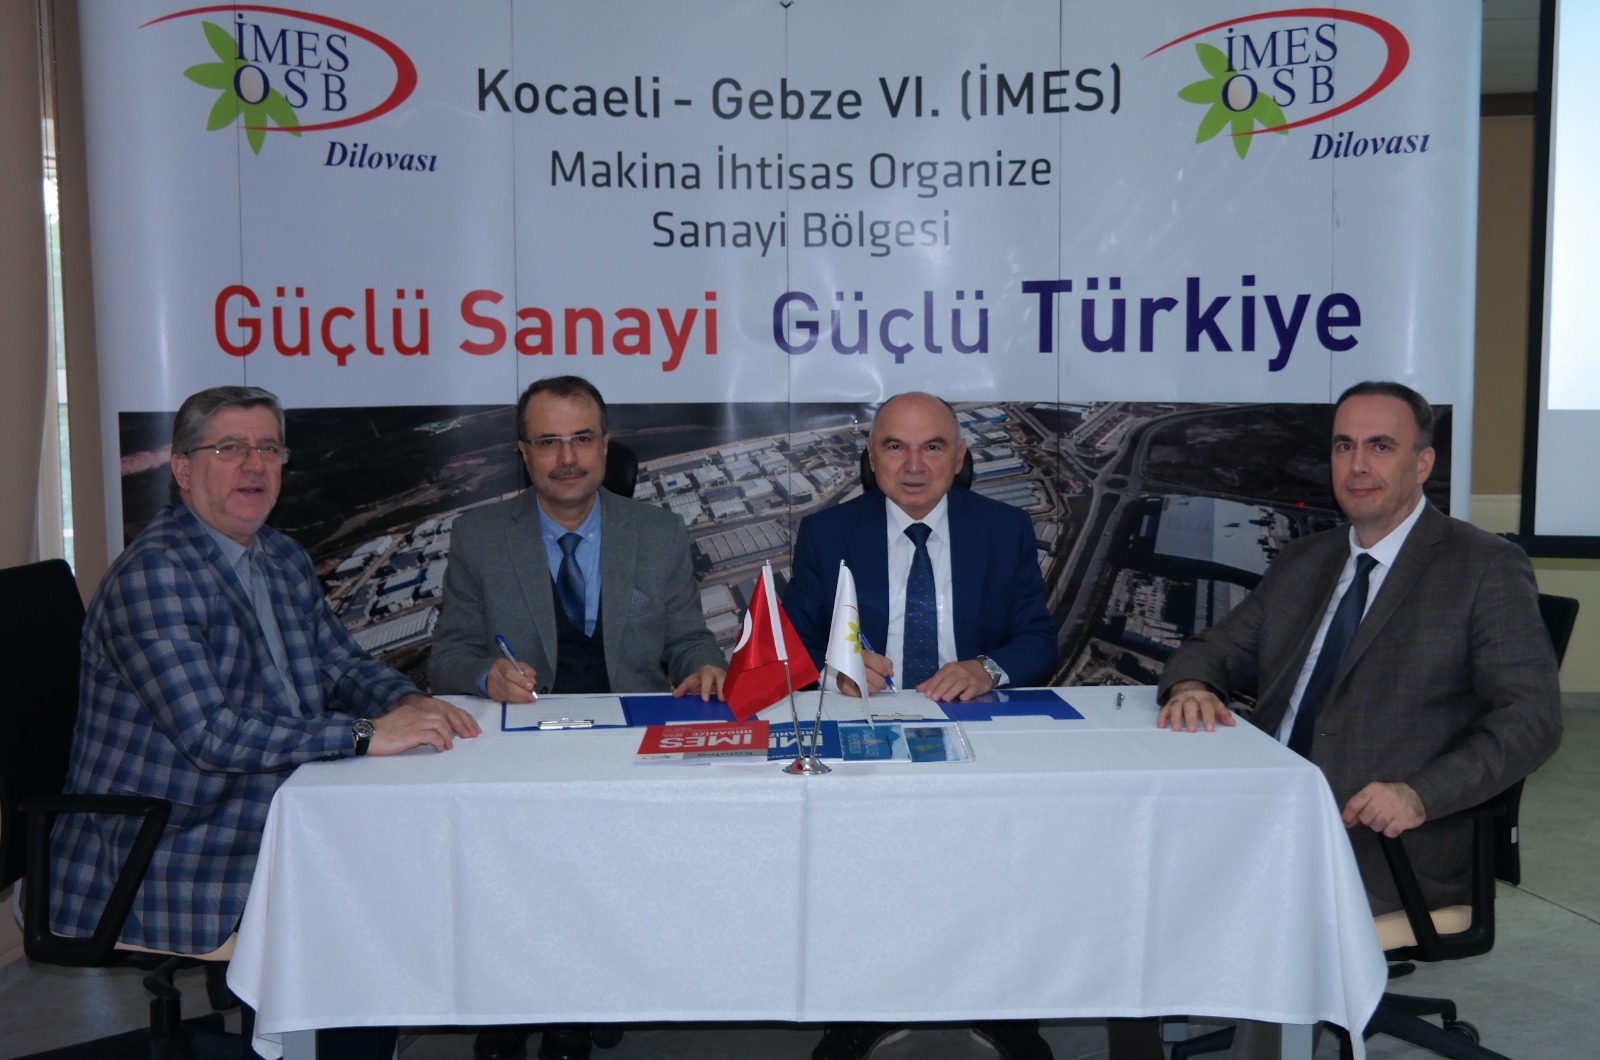 IMES OIZ and Marmara University Cooperation